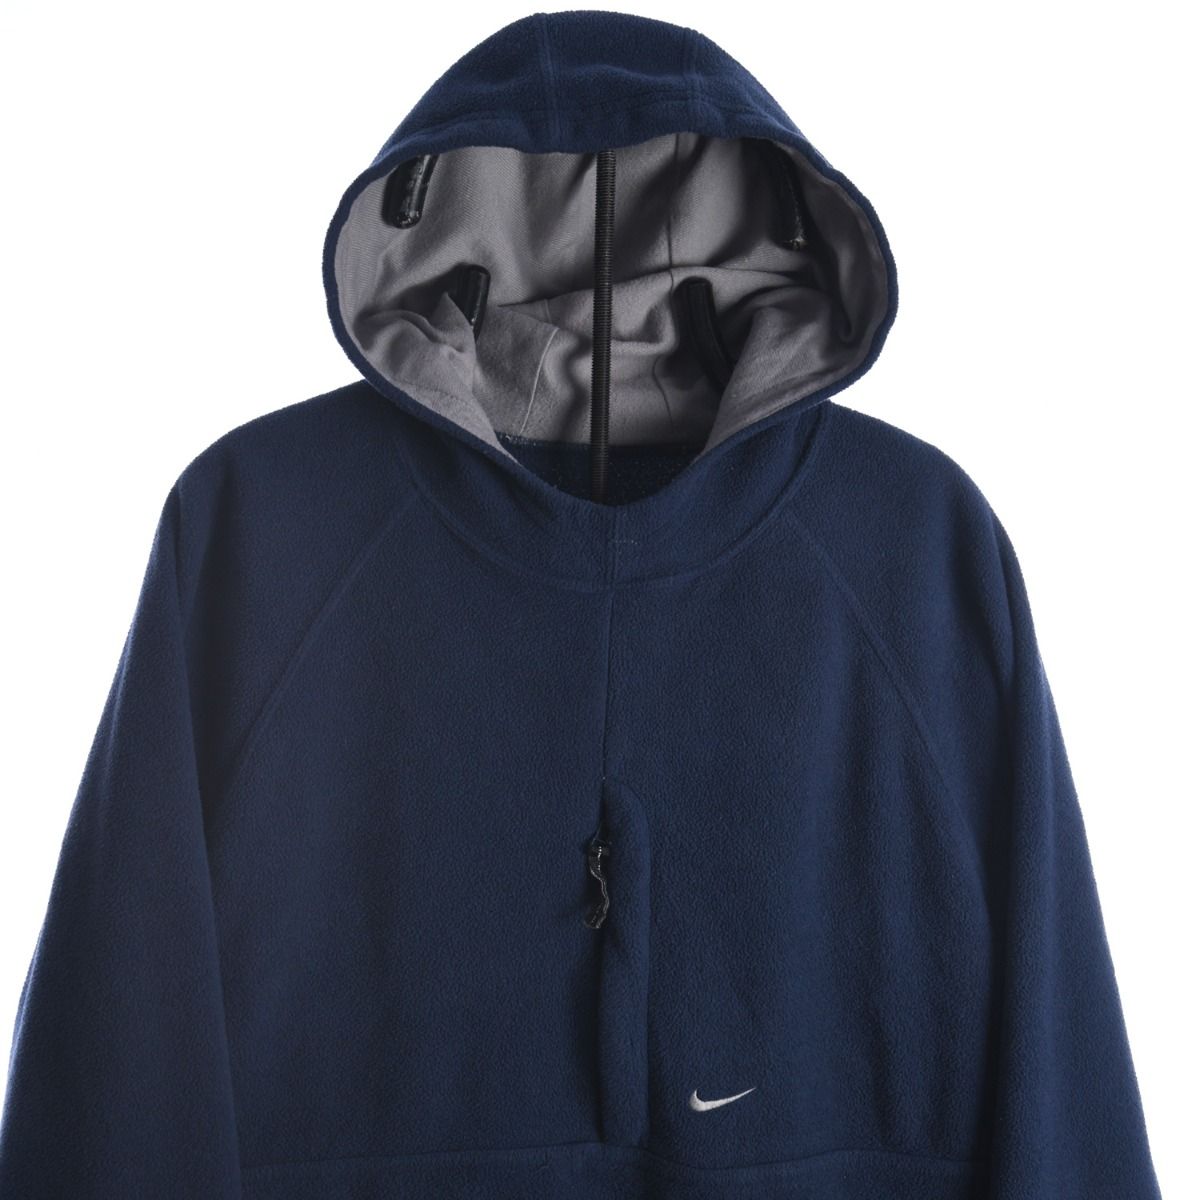 Nike Early 2000s Fleece Navy Blue Hoodie